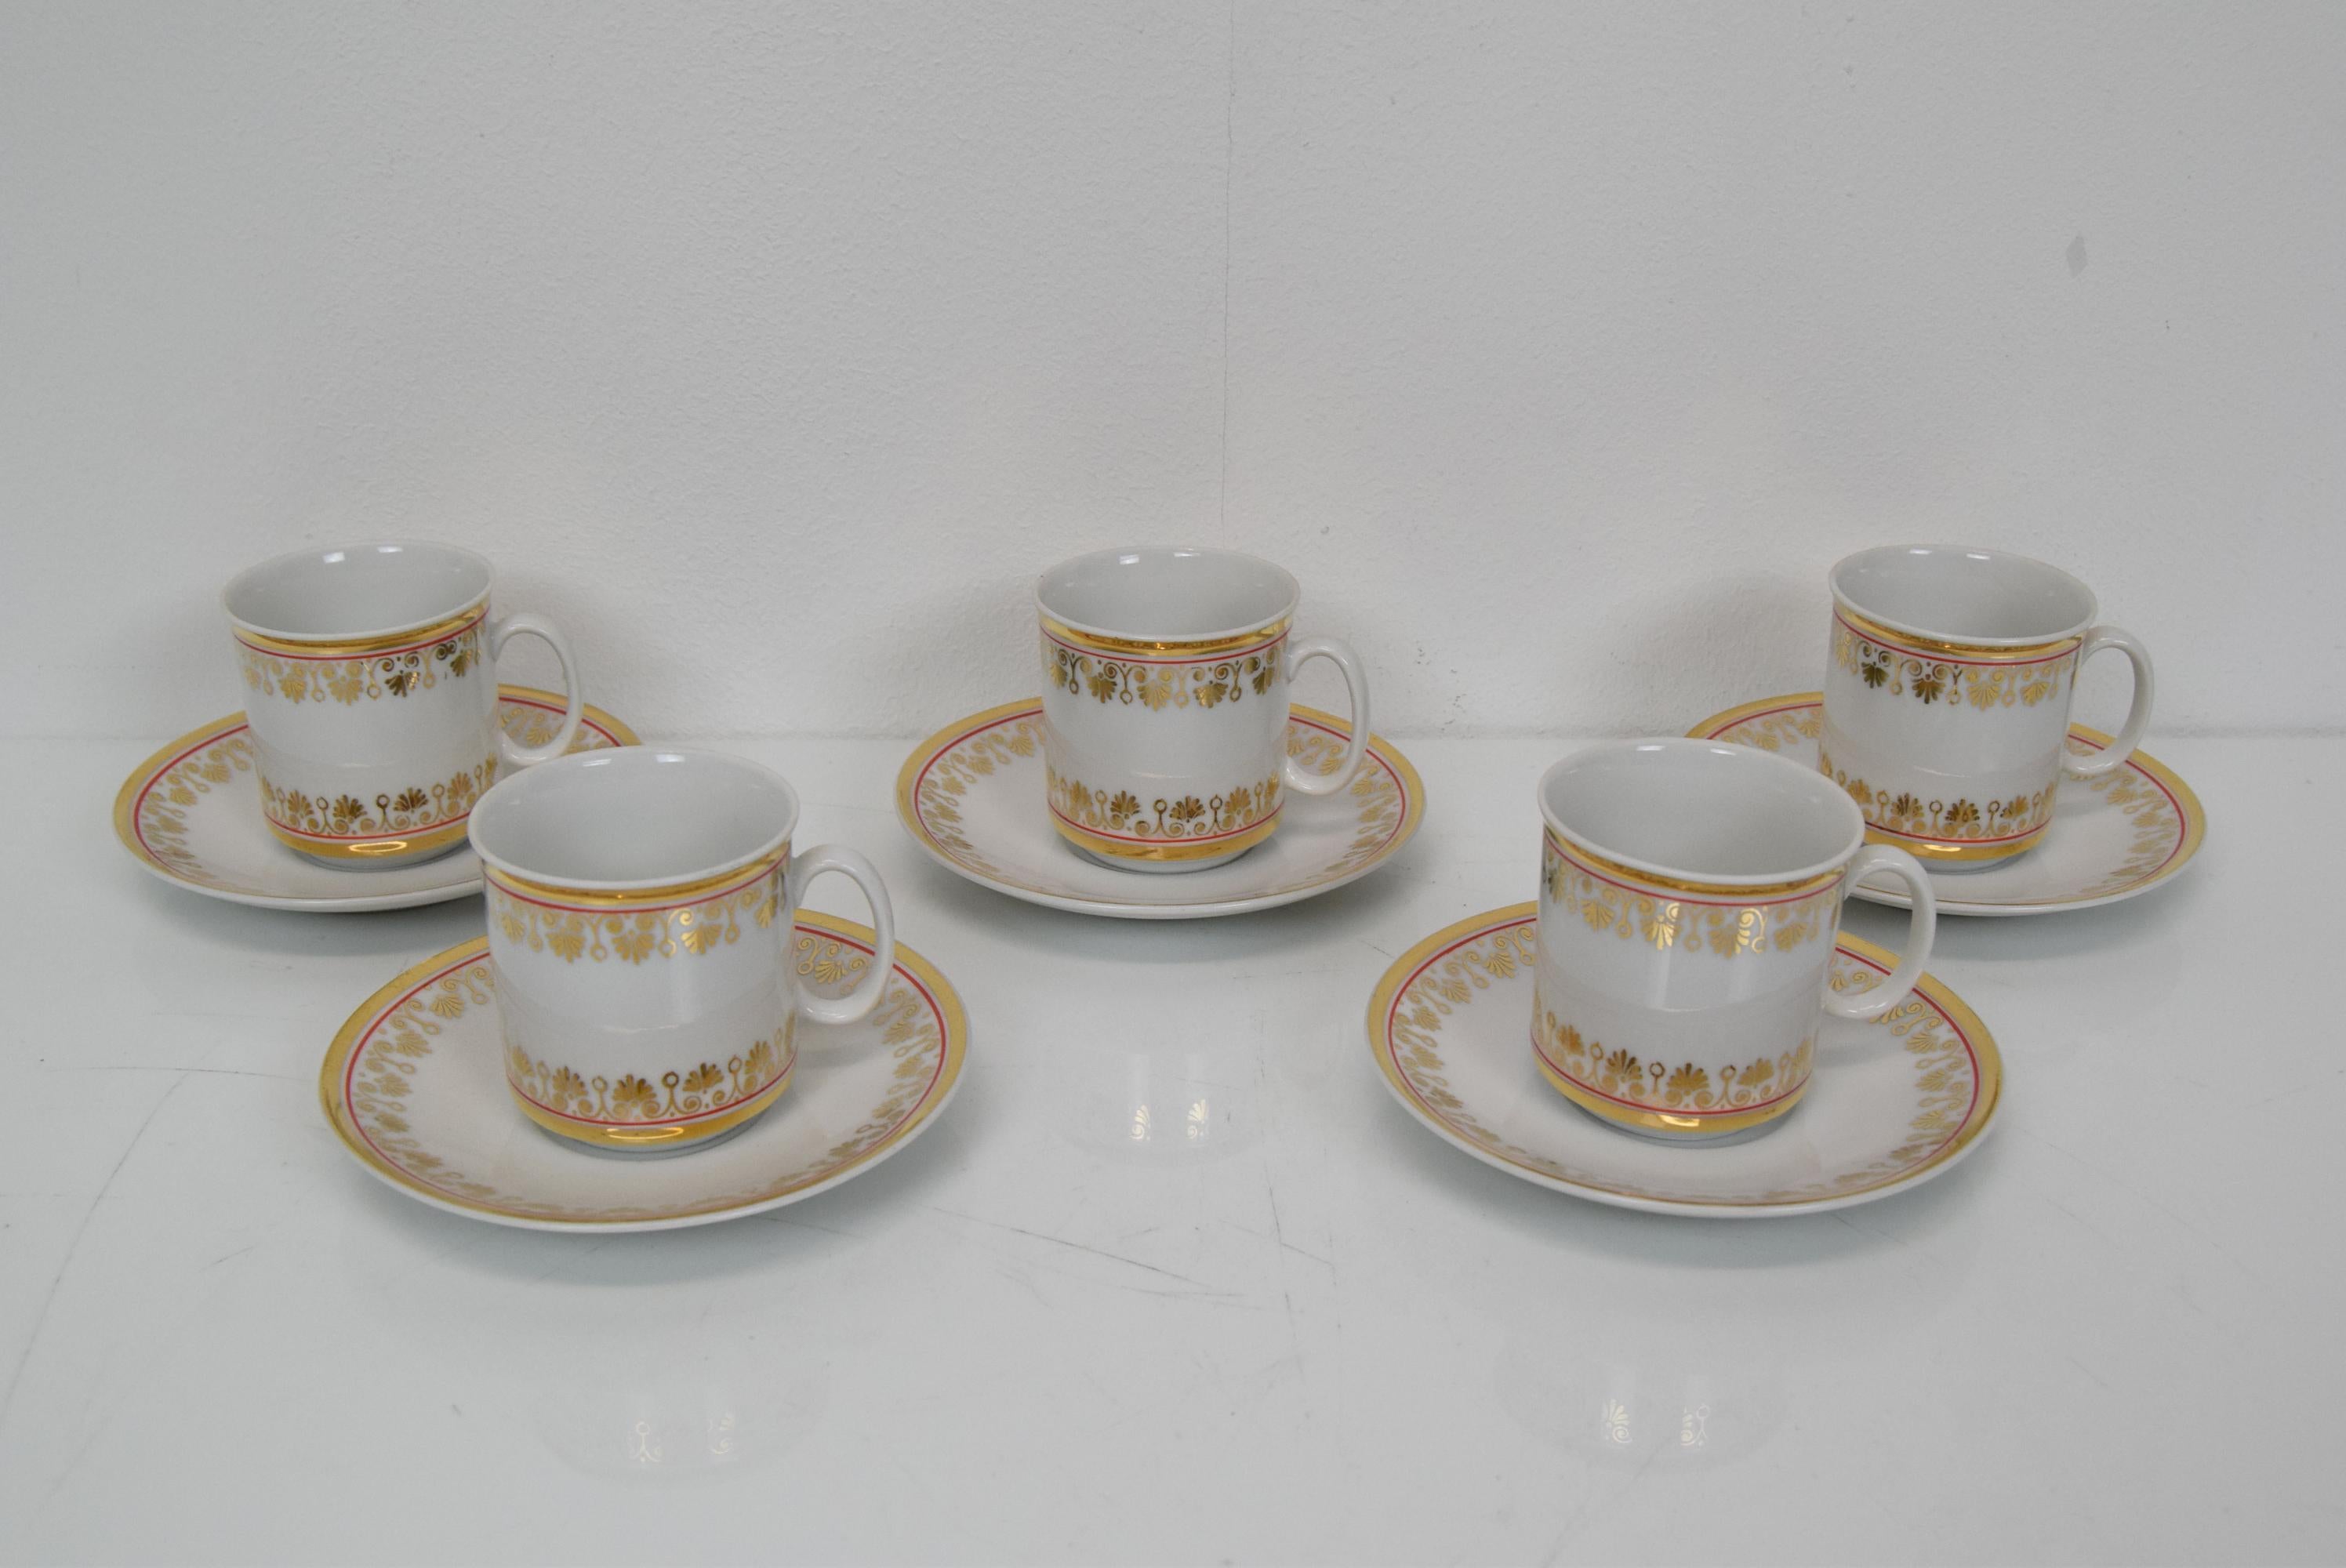 Made in Czechoslovakia
Made of Porcelain
Cups: 5,5 x 7 x 5,5 cm
Saucers: 11,5 x 1,5 cm
Rare pieces.
Good original condition.
 